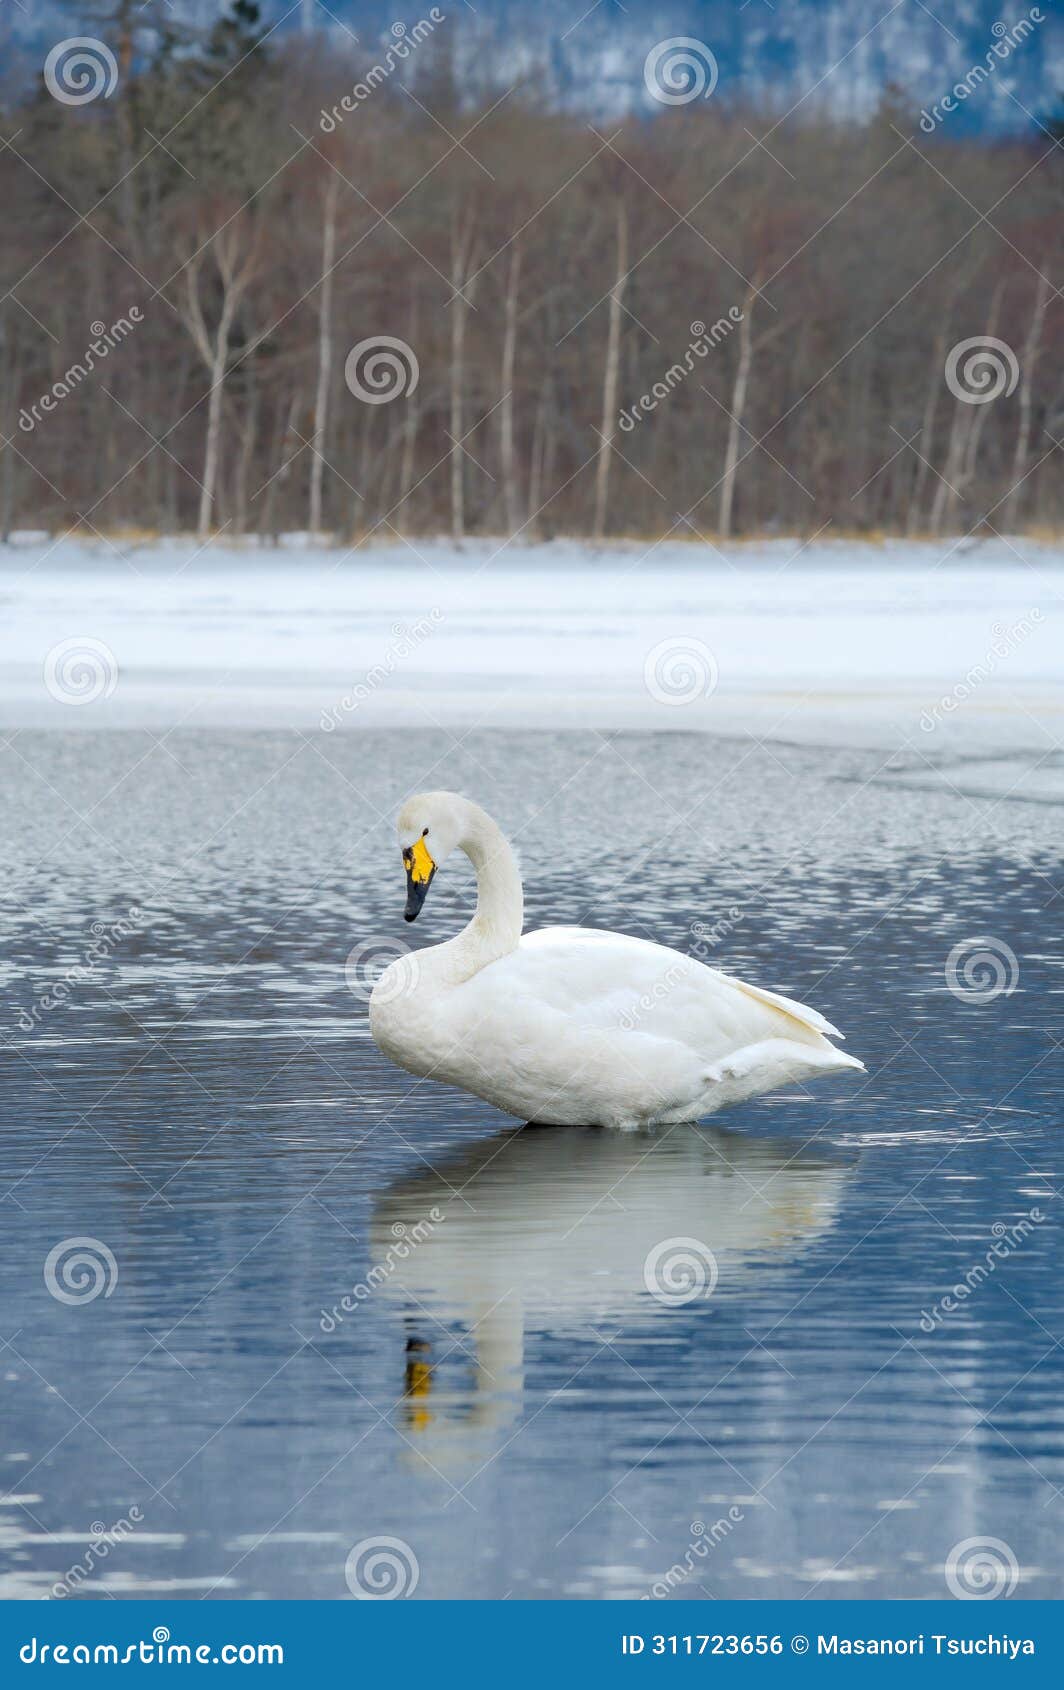 swan on a frozen winter lake. lake kussharo in hokkaido.